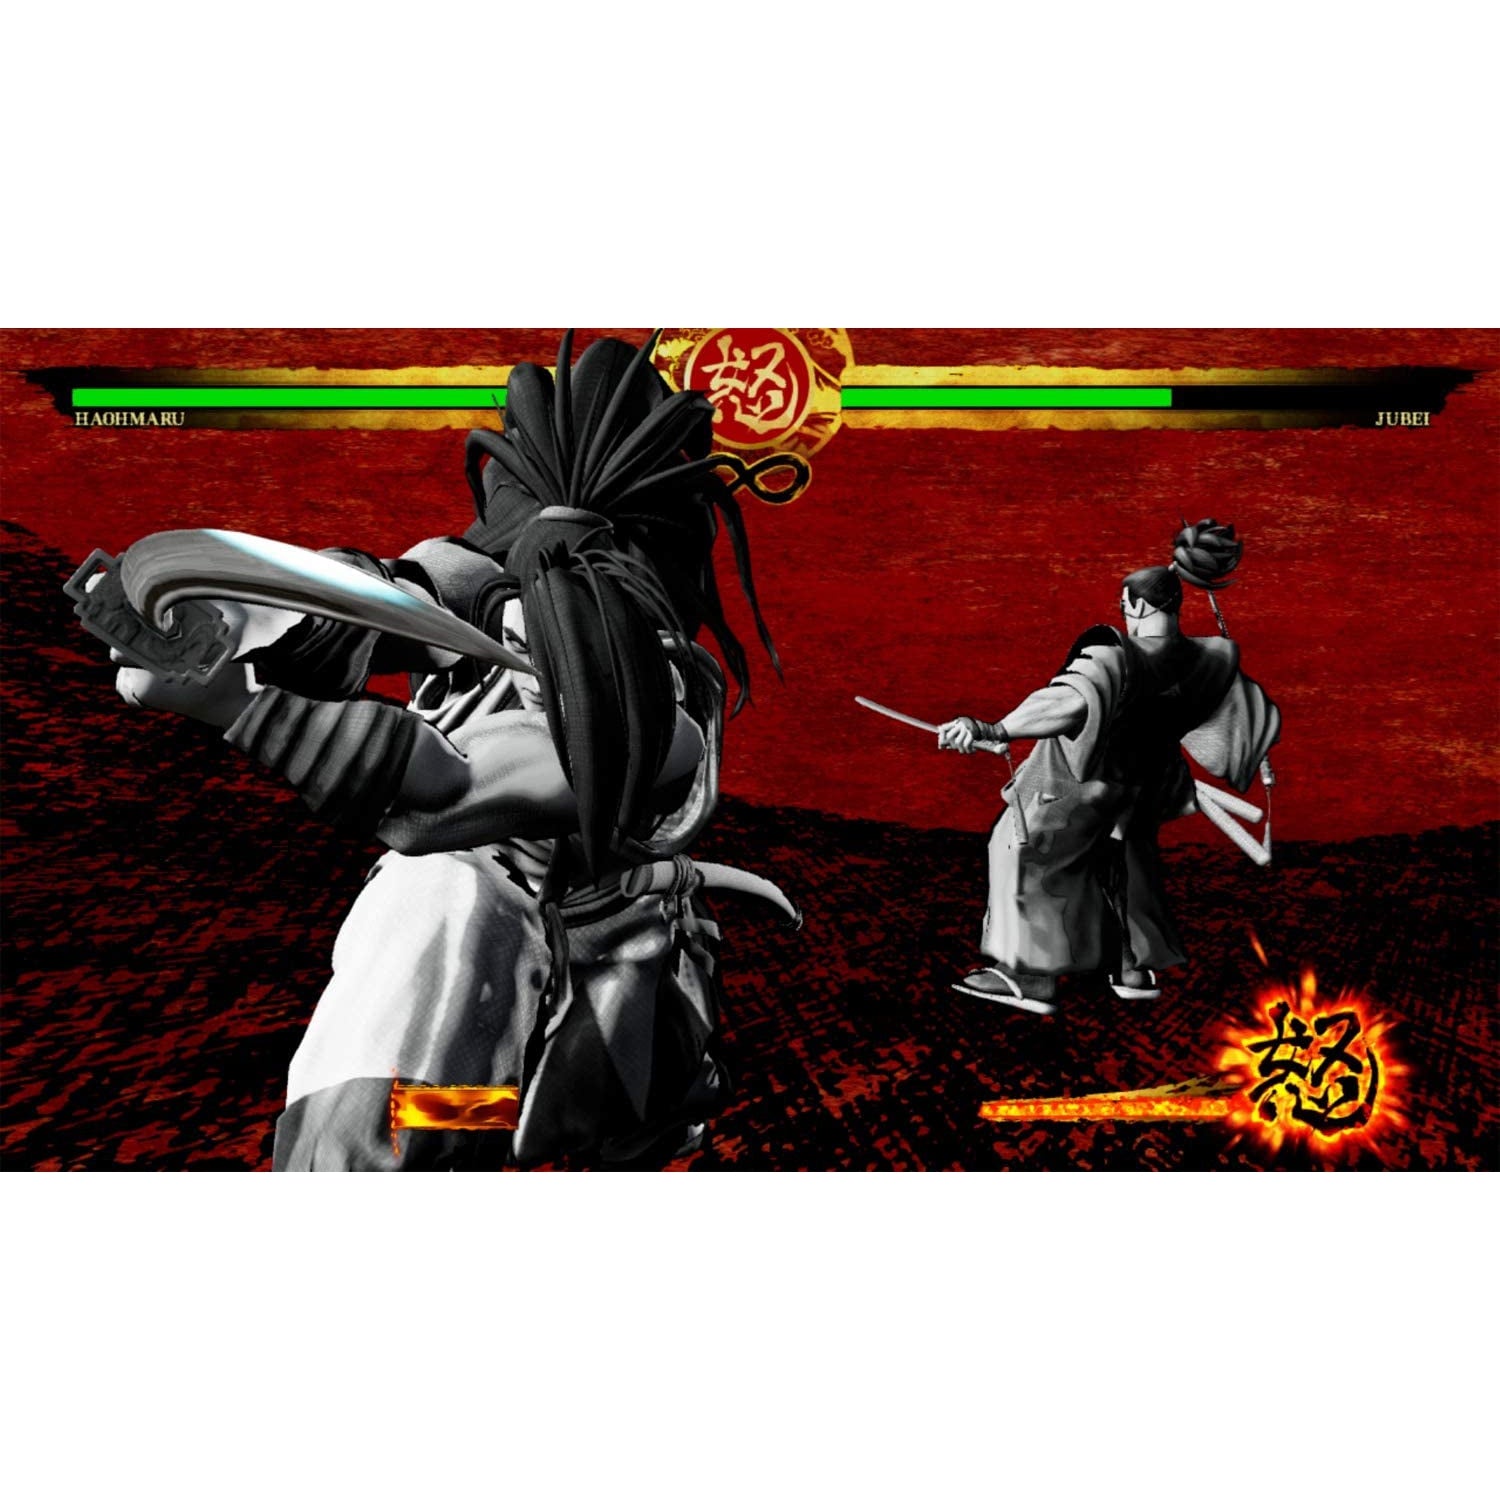 Samurai Shodown (Nintendo Switch)